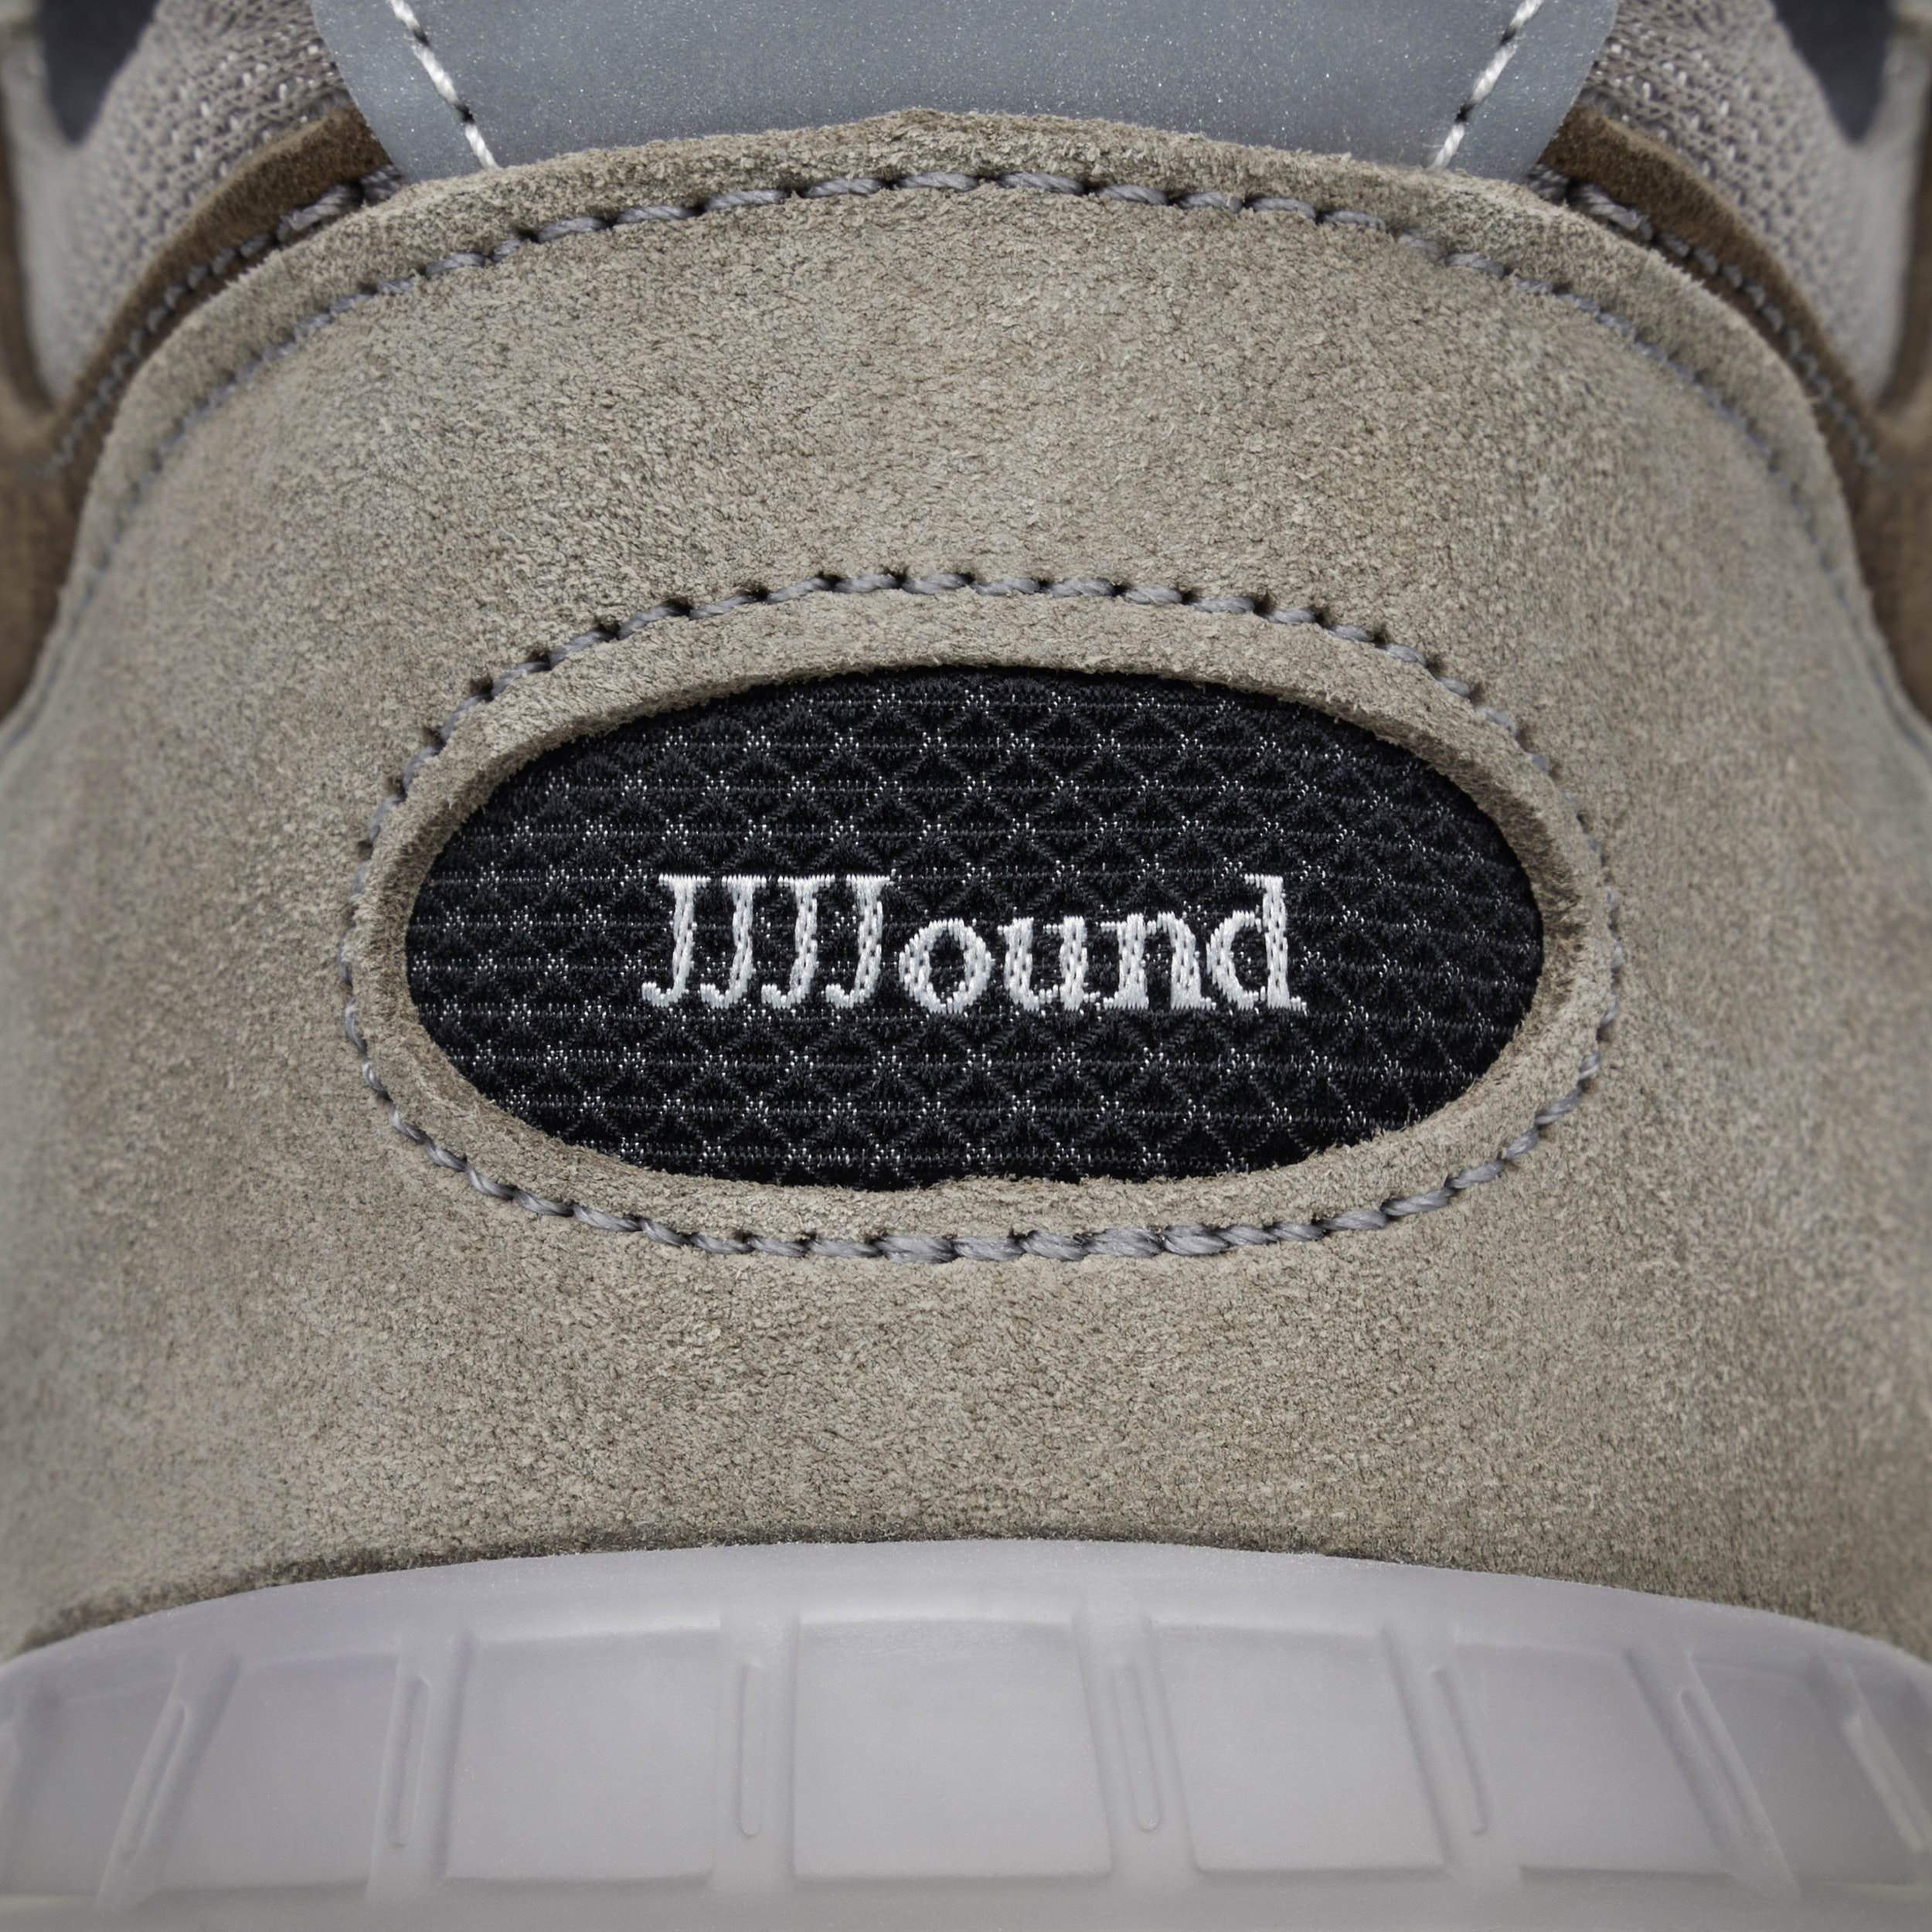 New Balance x JJJJound 991 系列联名鞋款即将发售